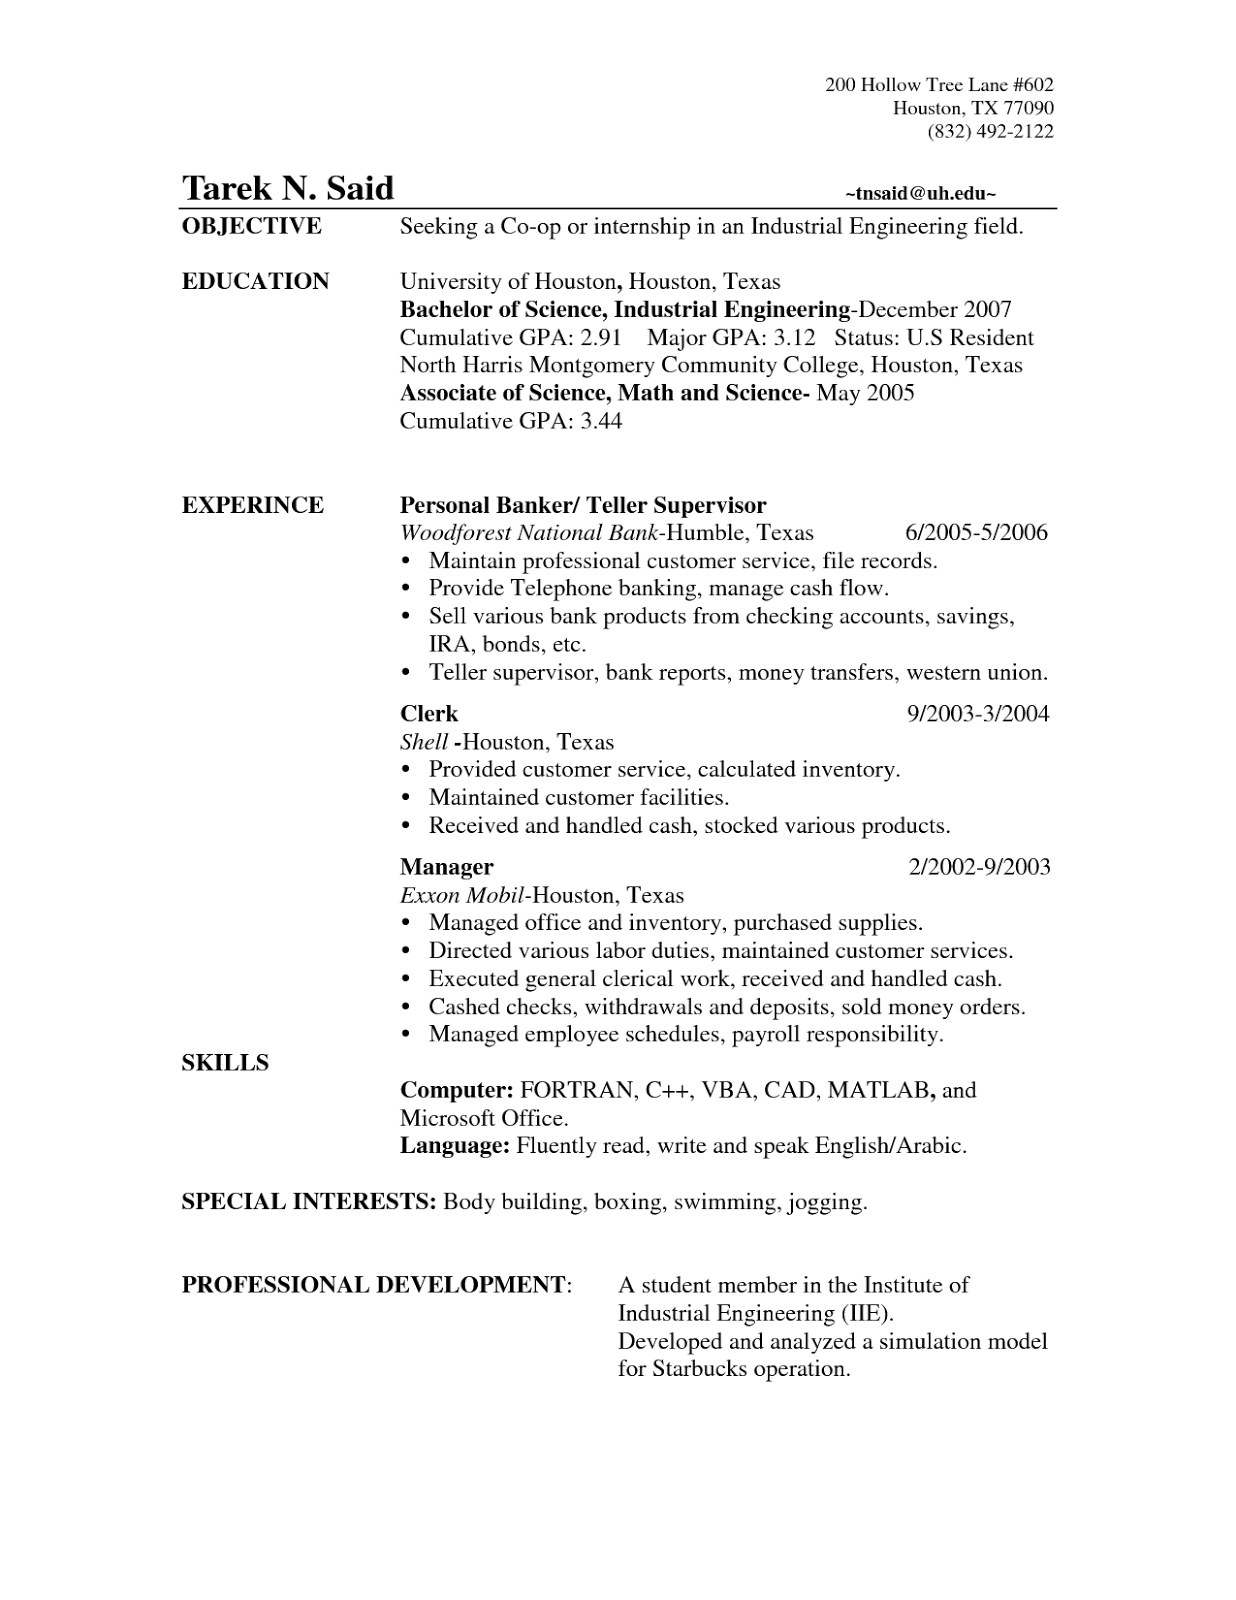 Bilingual and help desk resume